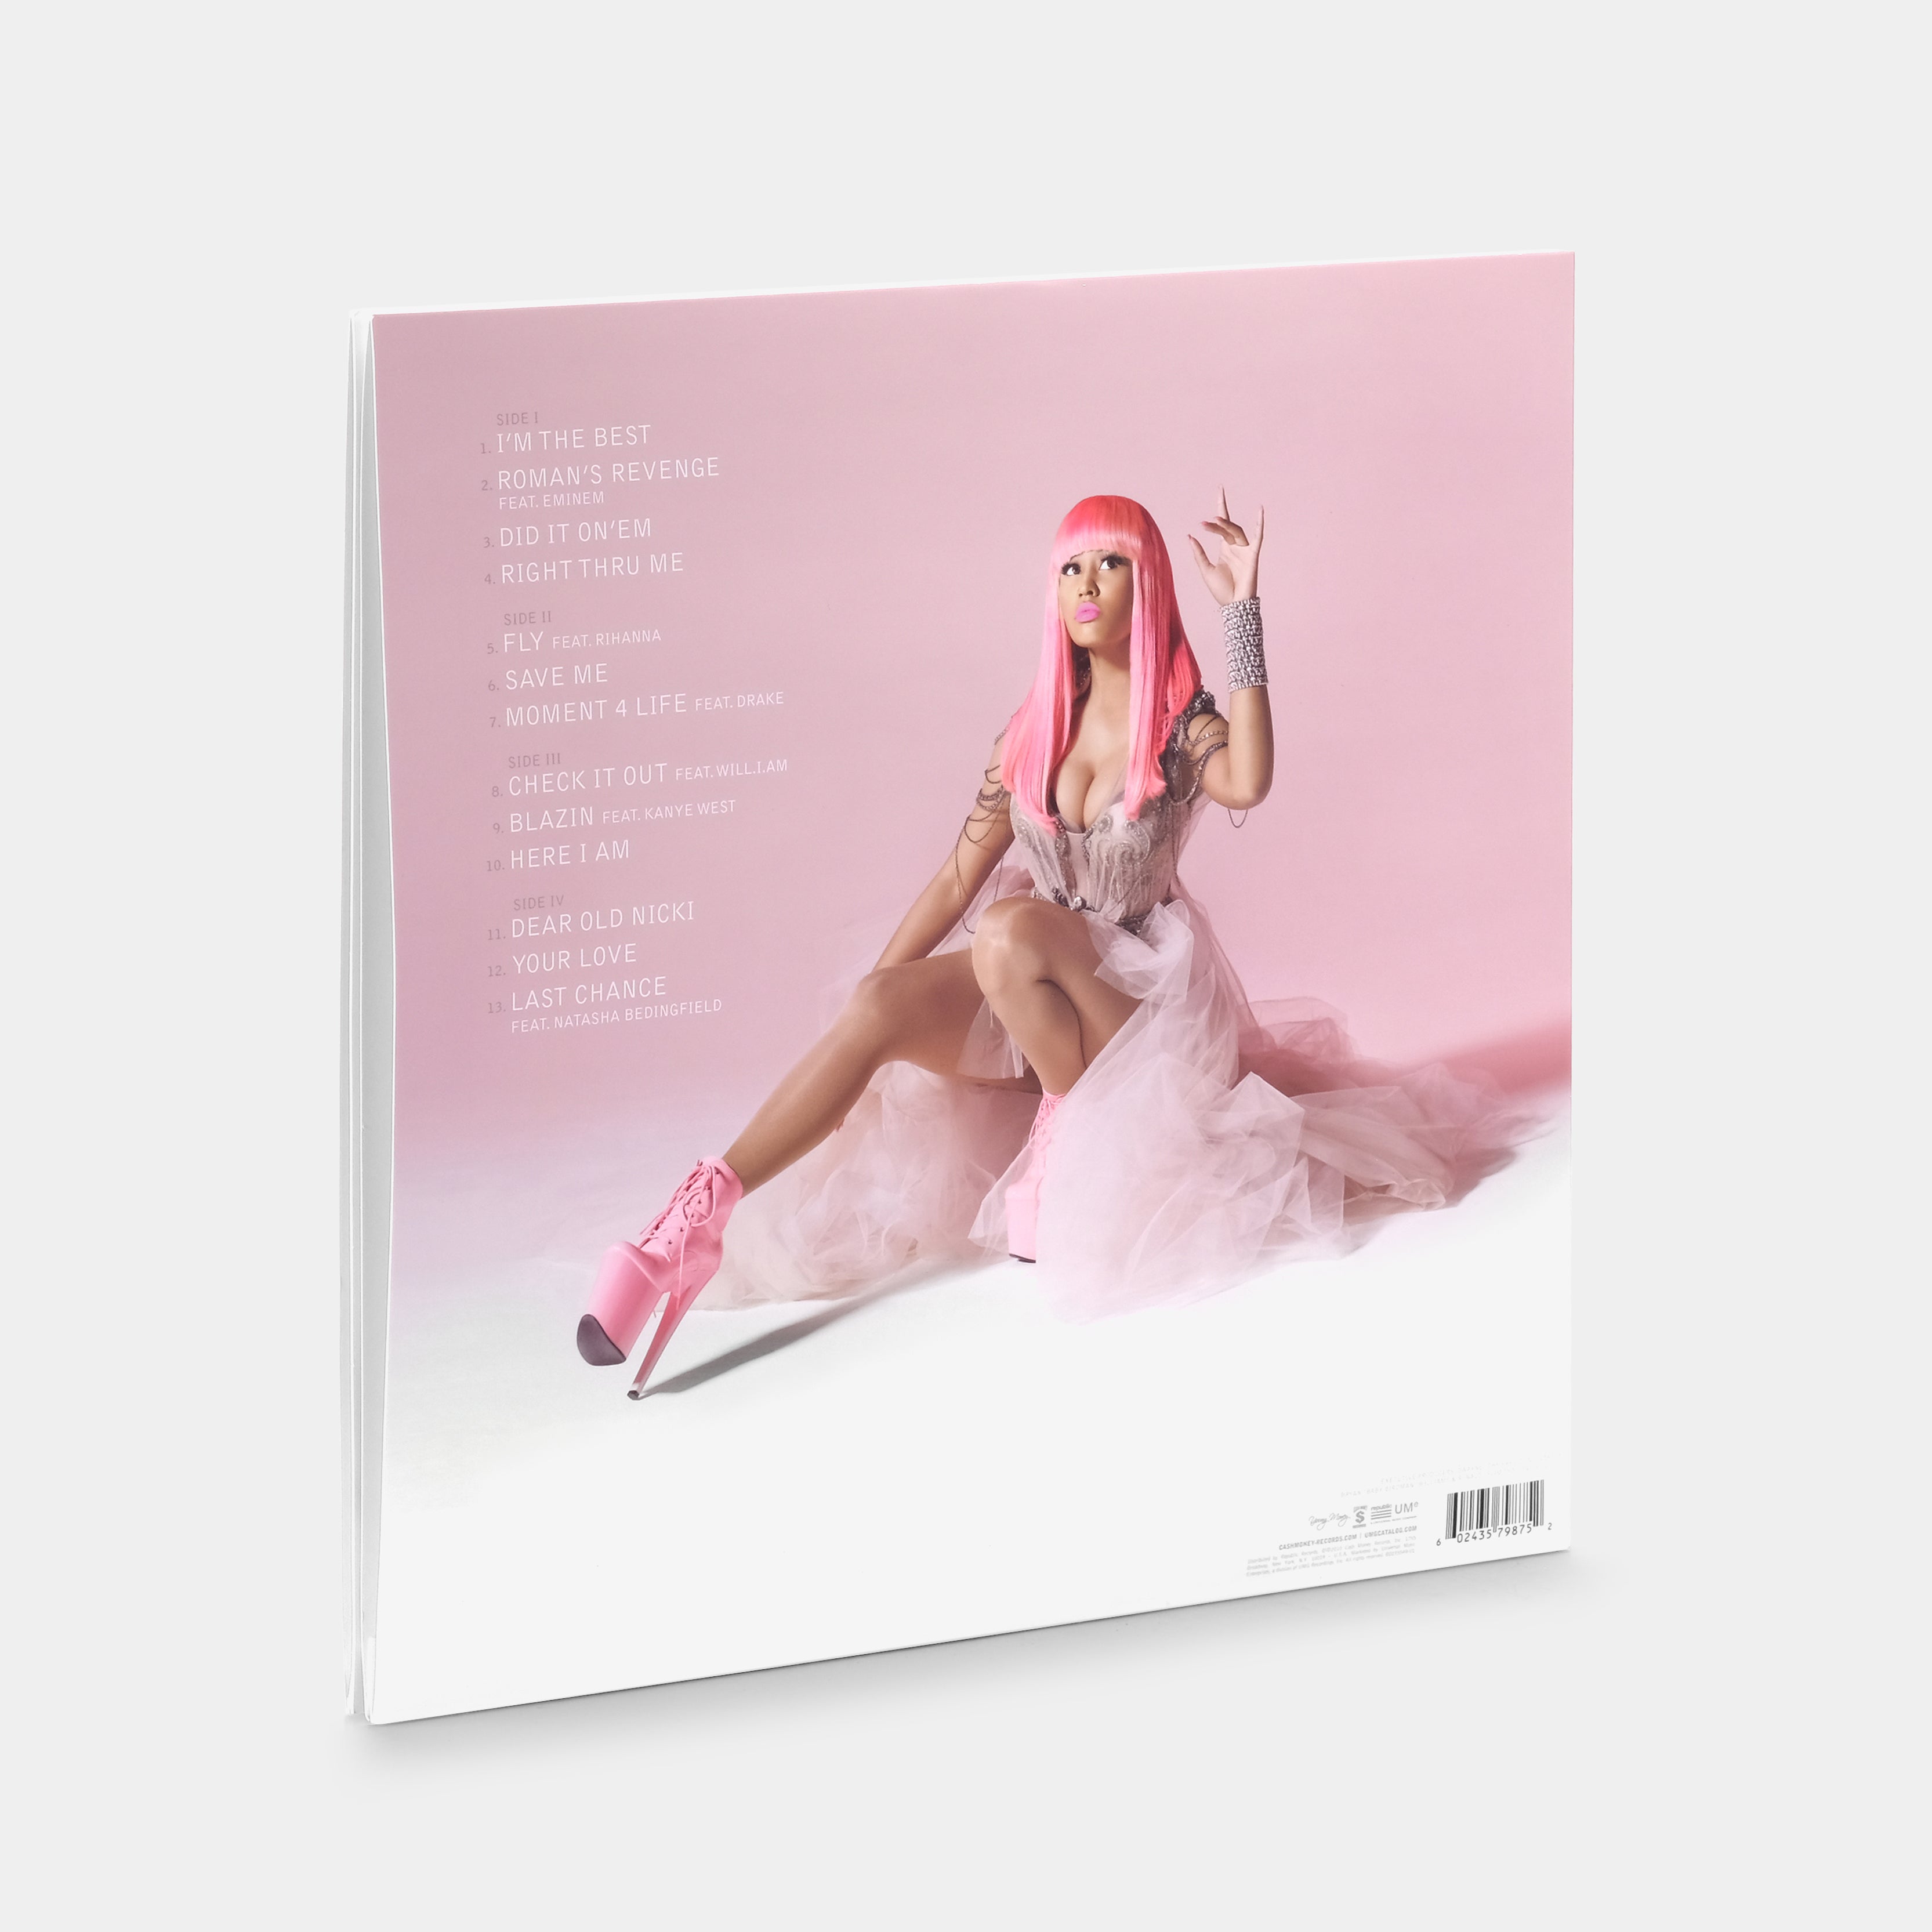 Nicki Minaj - Pink Friday 2xLP Pink Vinyl Record